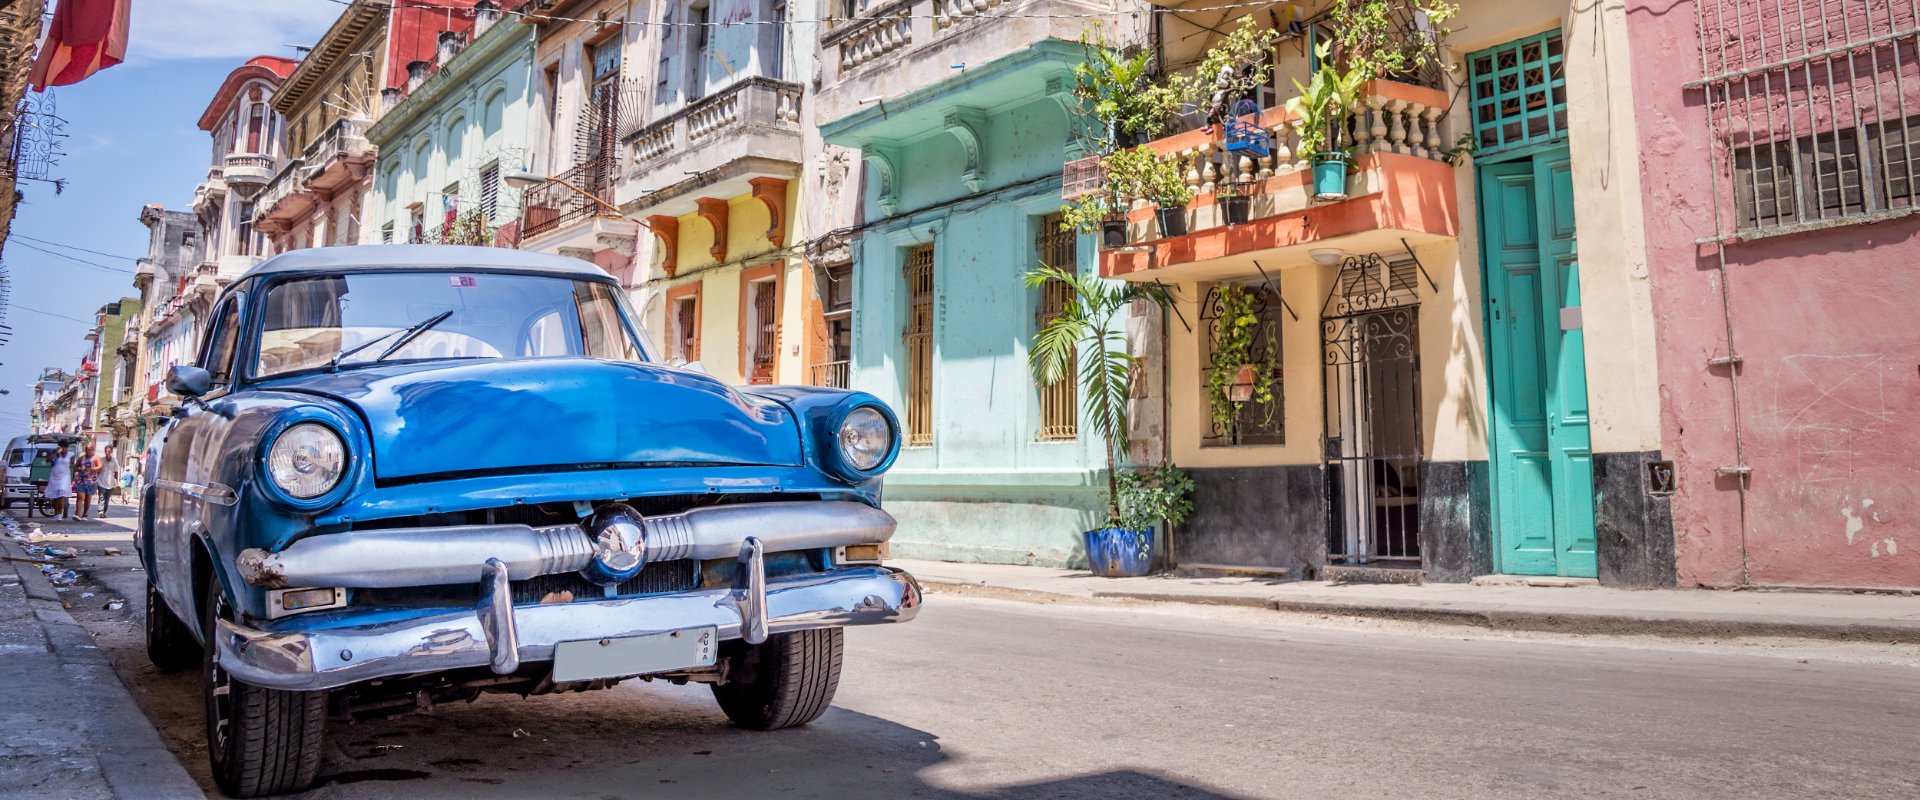 Ruta por Cuba en 15 días: Descubrir Cuba en 2 semanas 